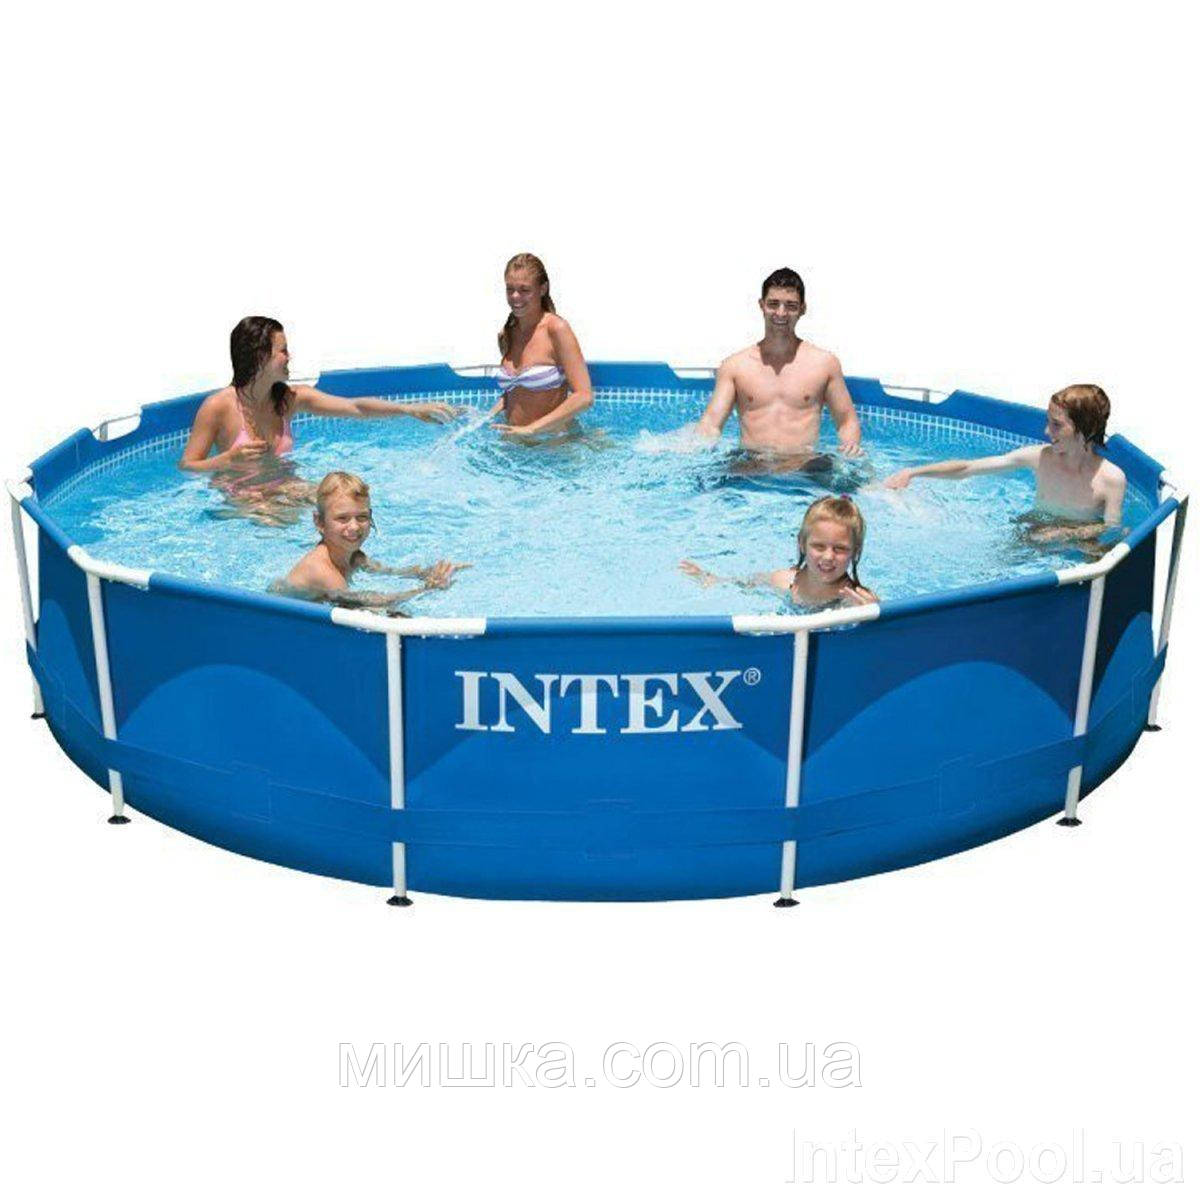 Каркасный бассейн Intex 28210, 366*76 см